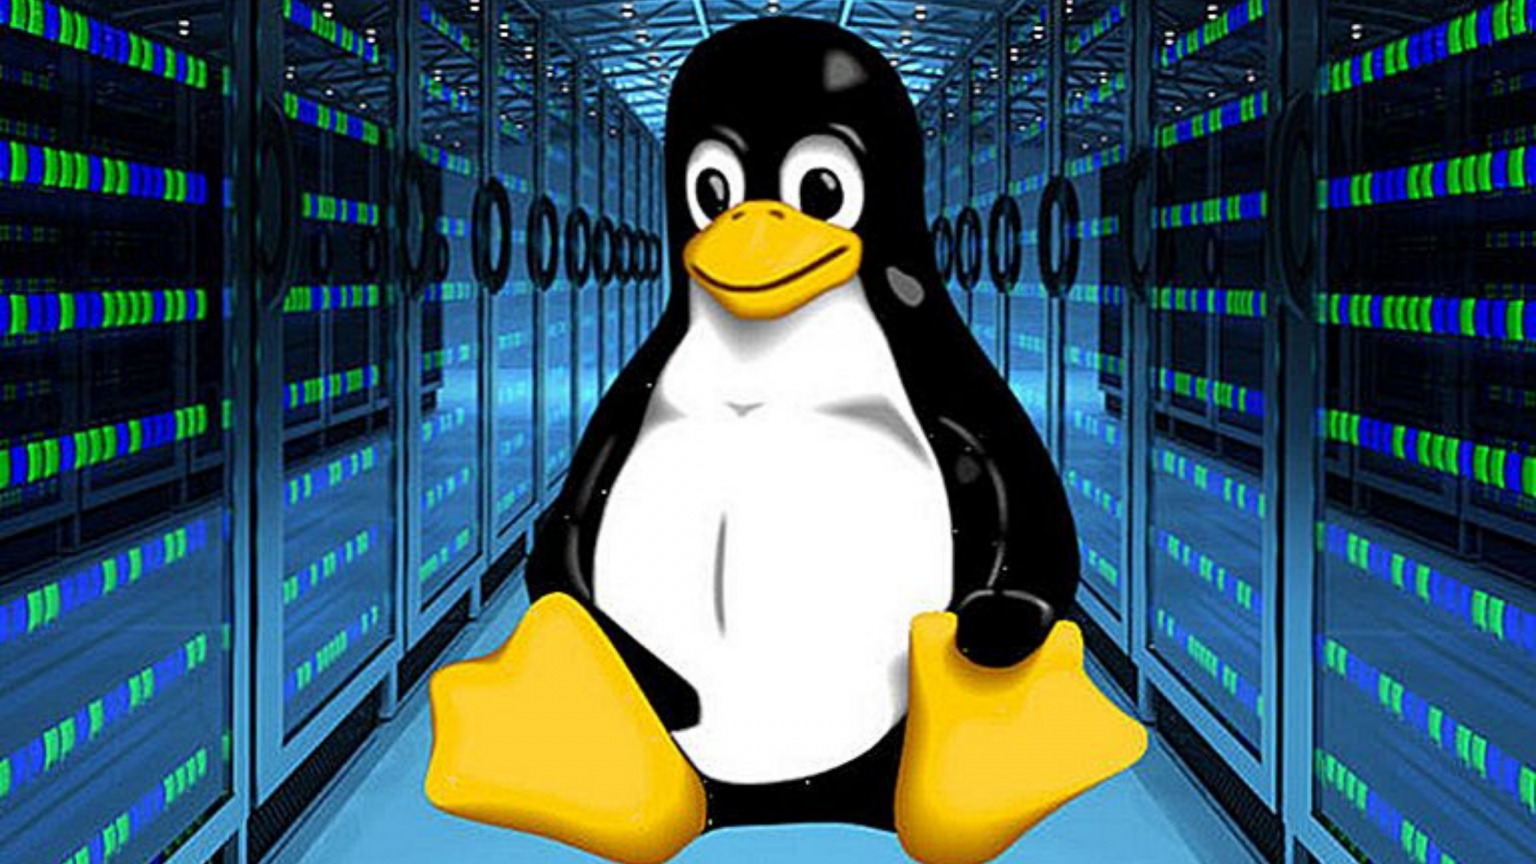 Shim bootloader vulnerability affecting linux distros